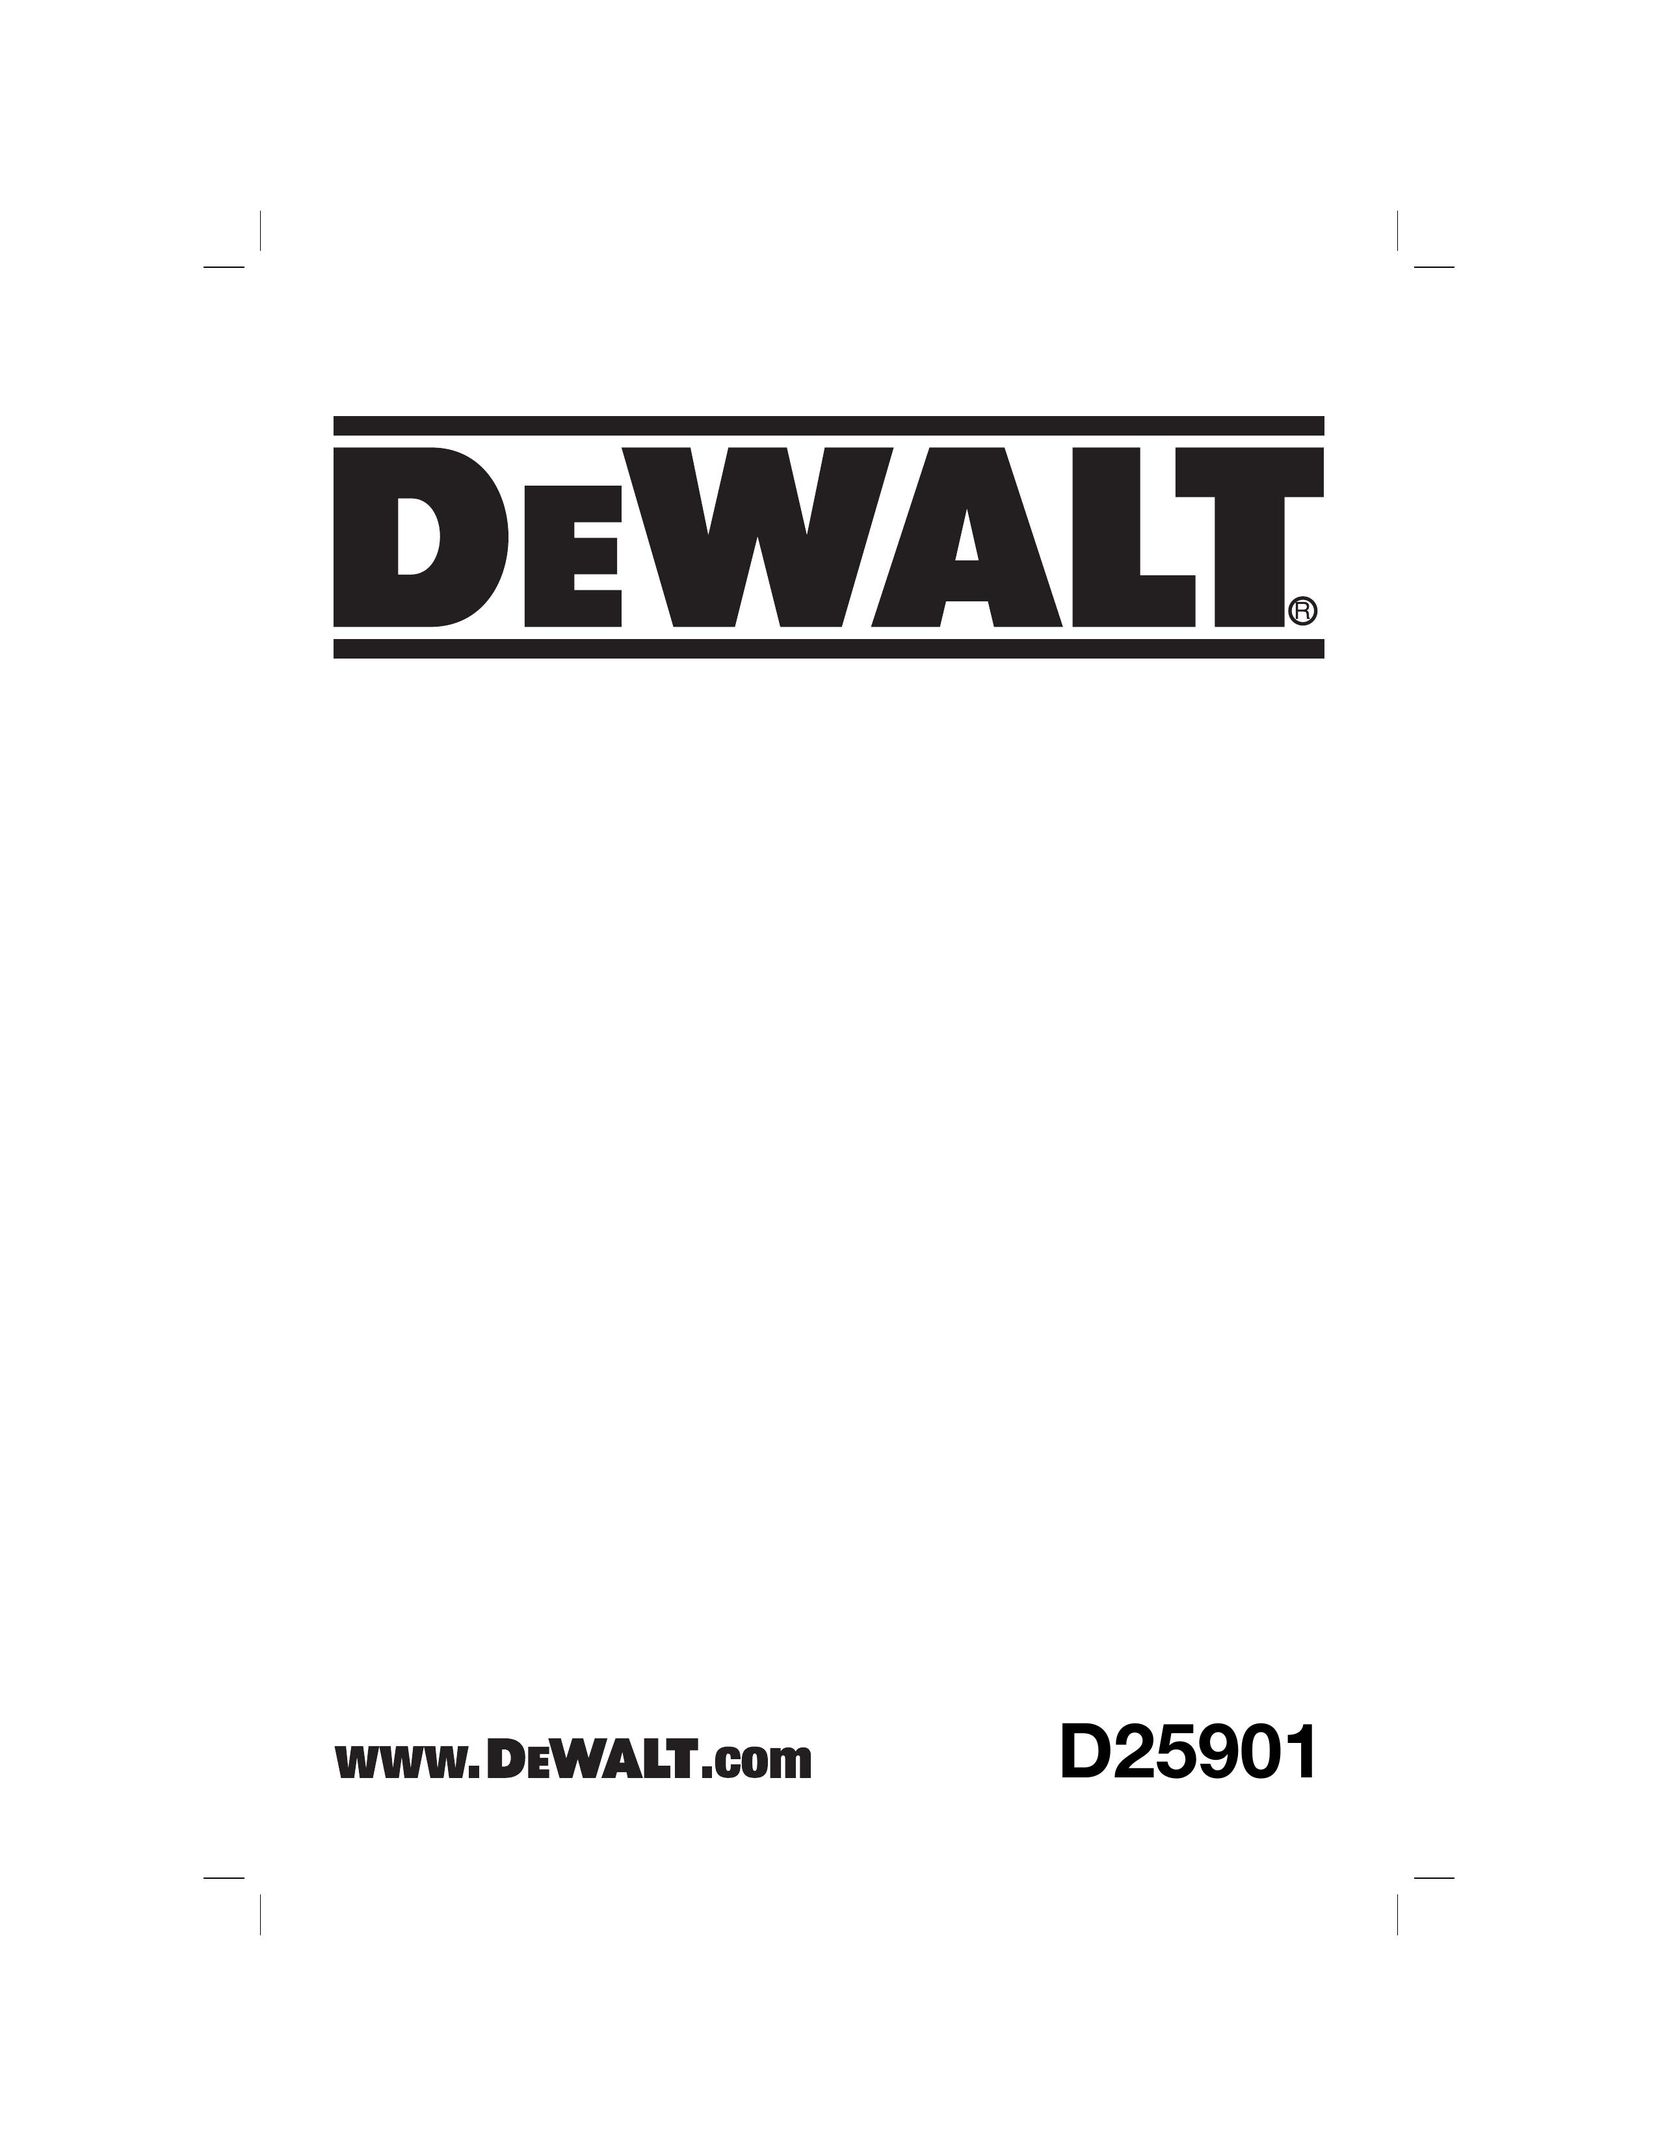 DeWalt D25901 Power Hammer User Manual